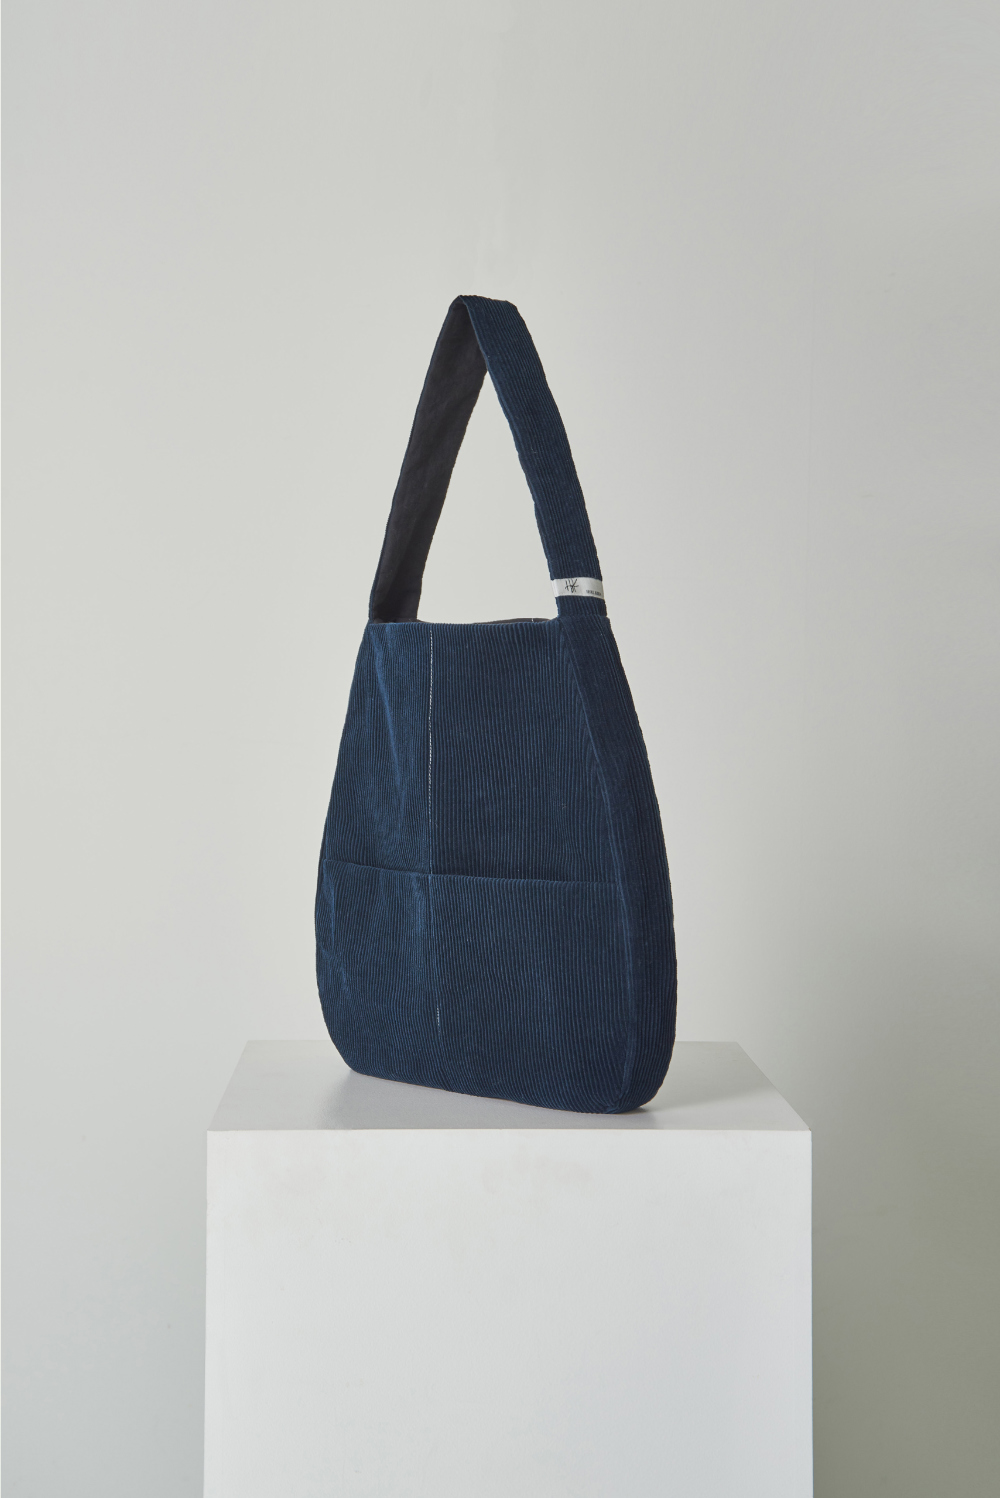 bag navy blue color image-S3L3